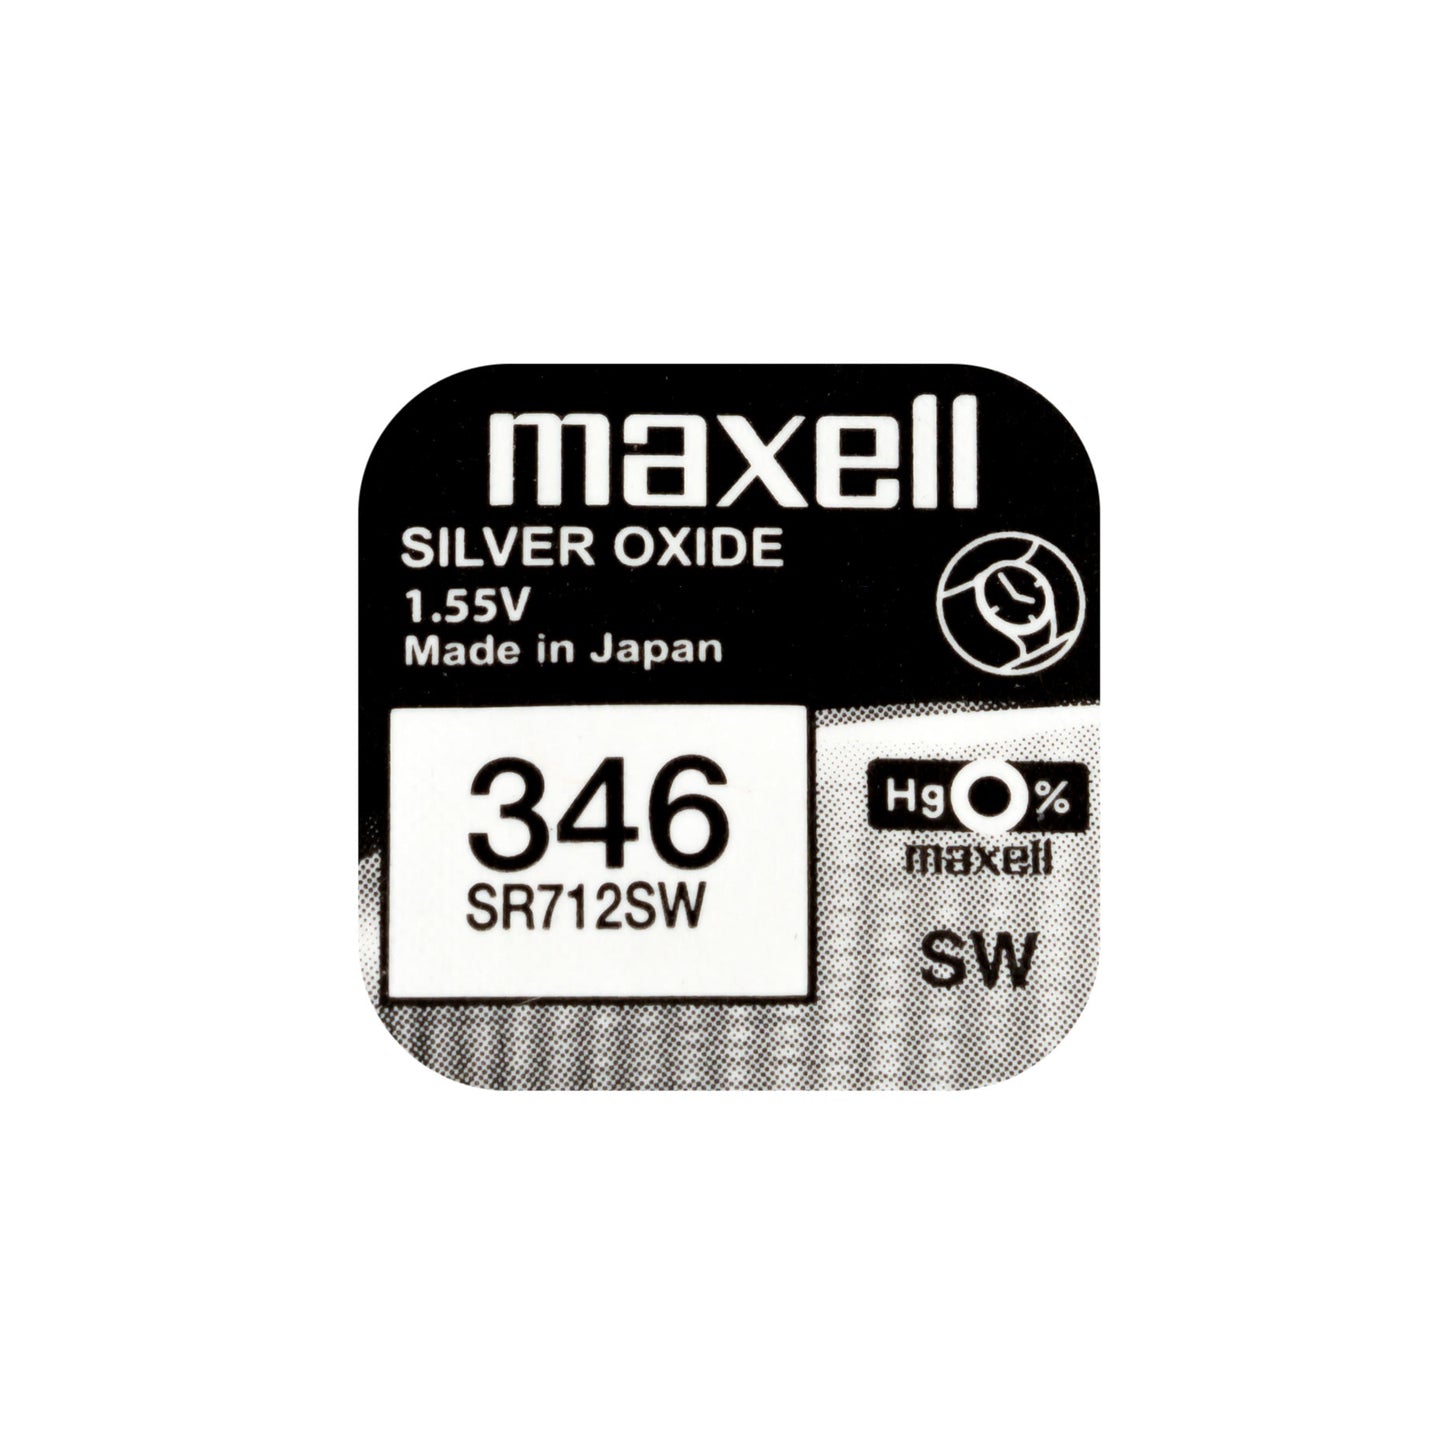 Maxell SR712SW (346) Silver Oxide Watch Batteries